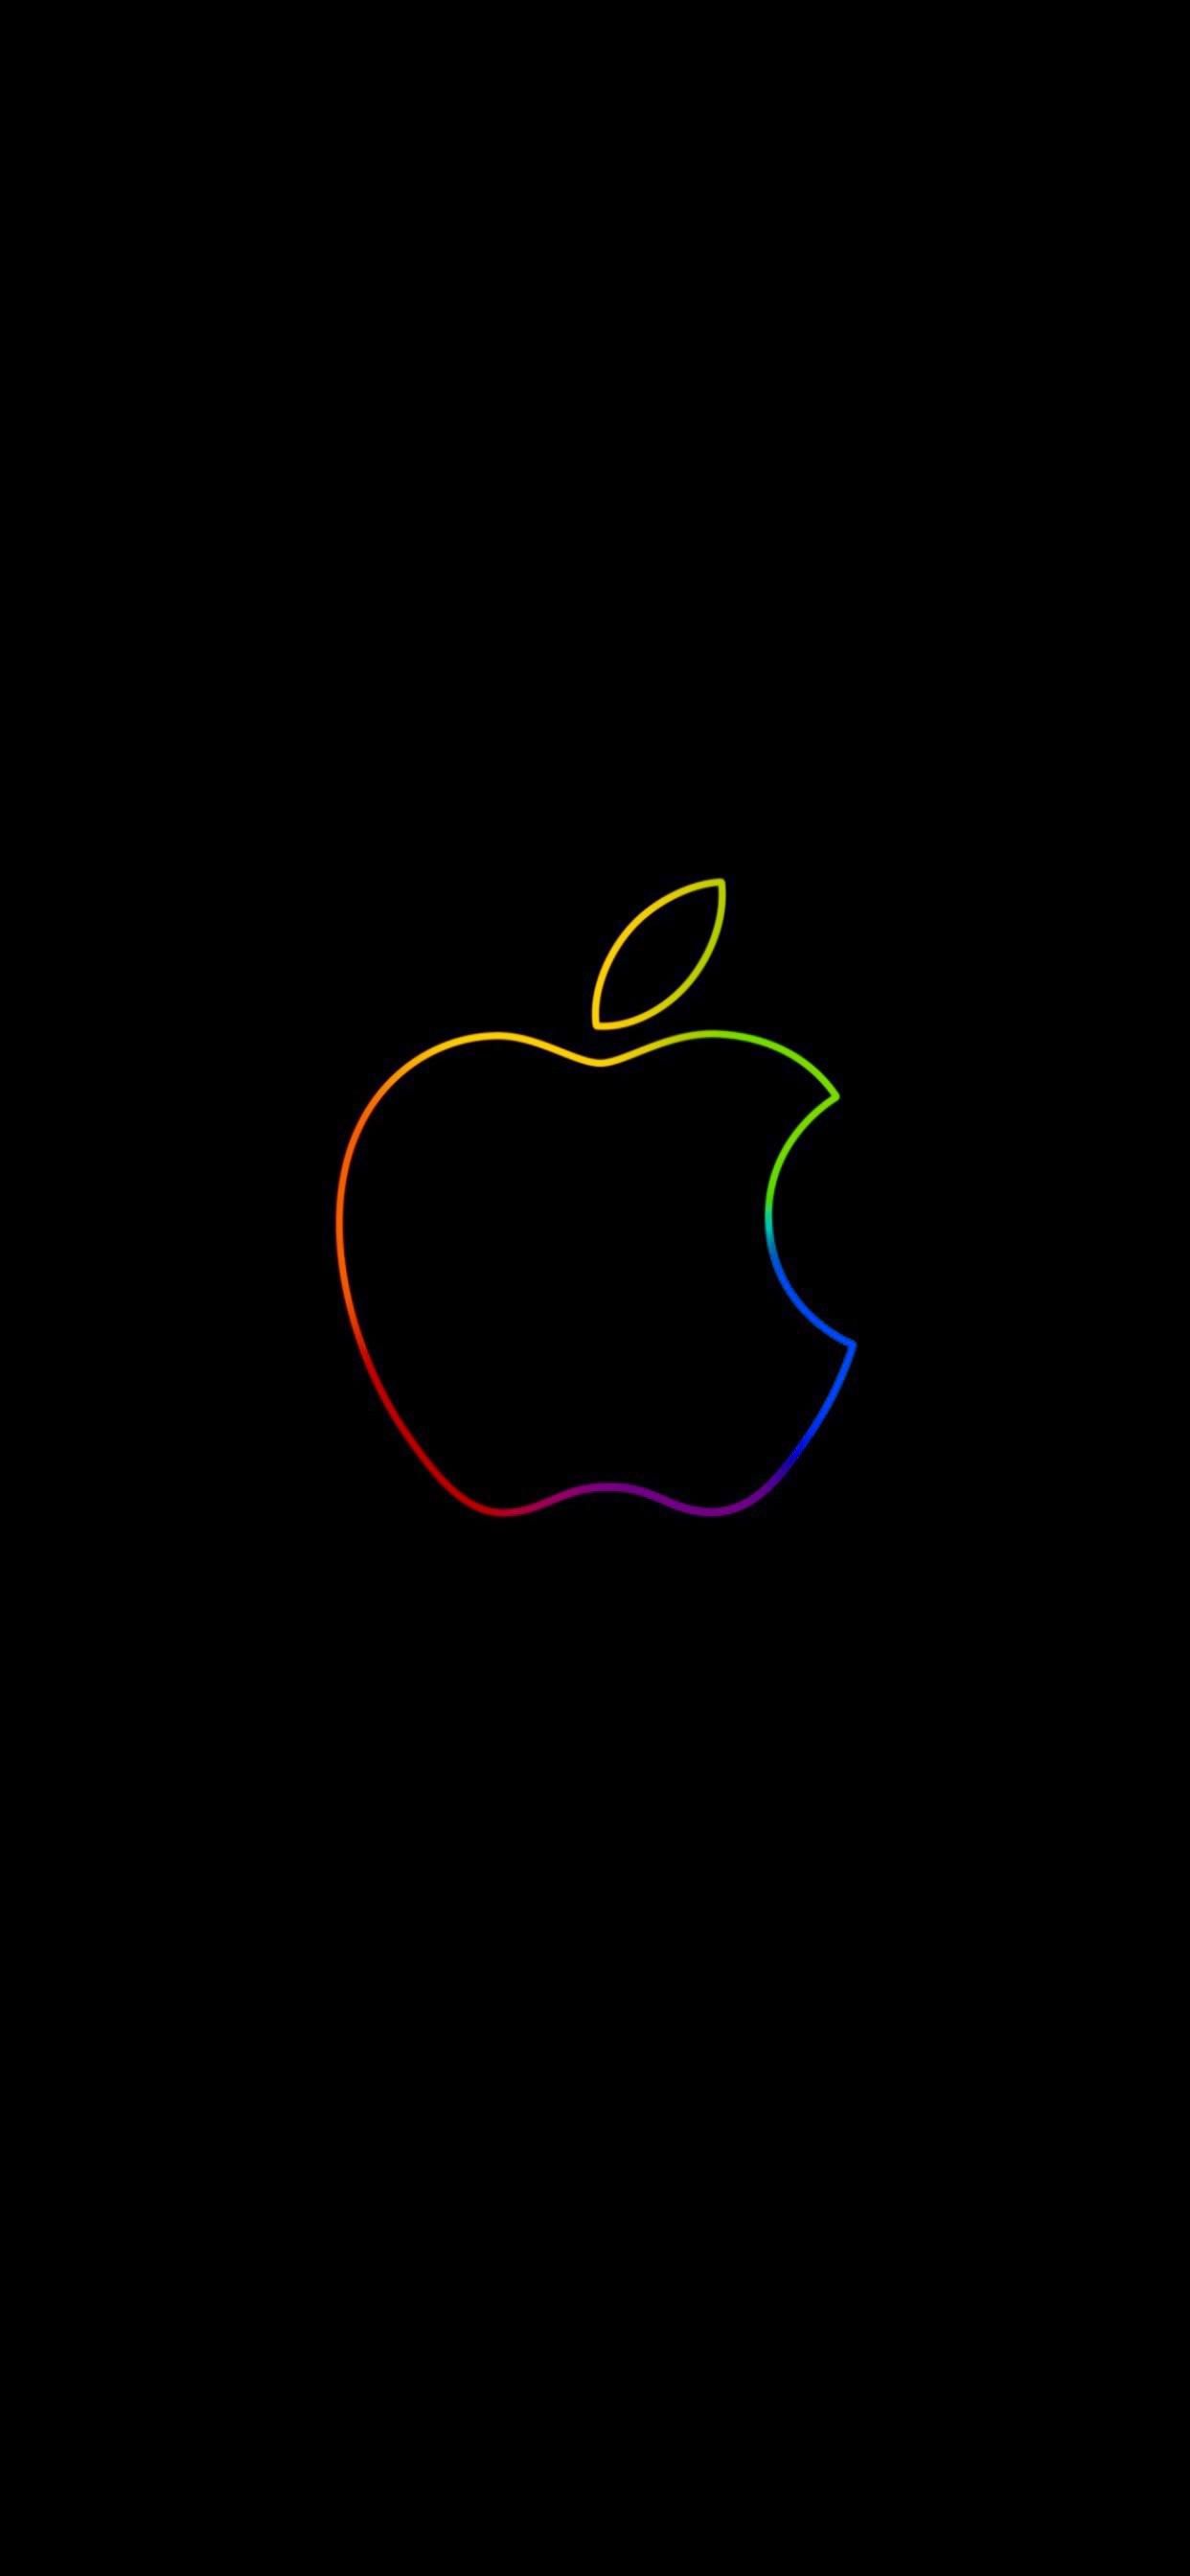 Neon Apple Logo Wallpapers